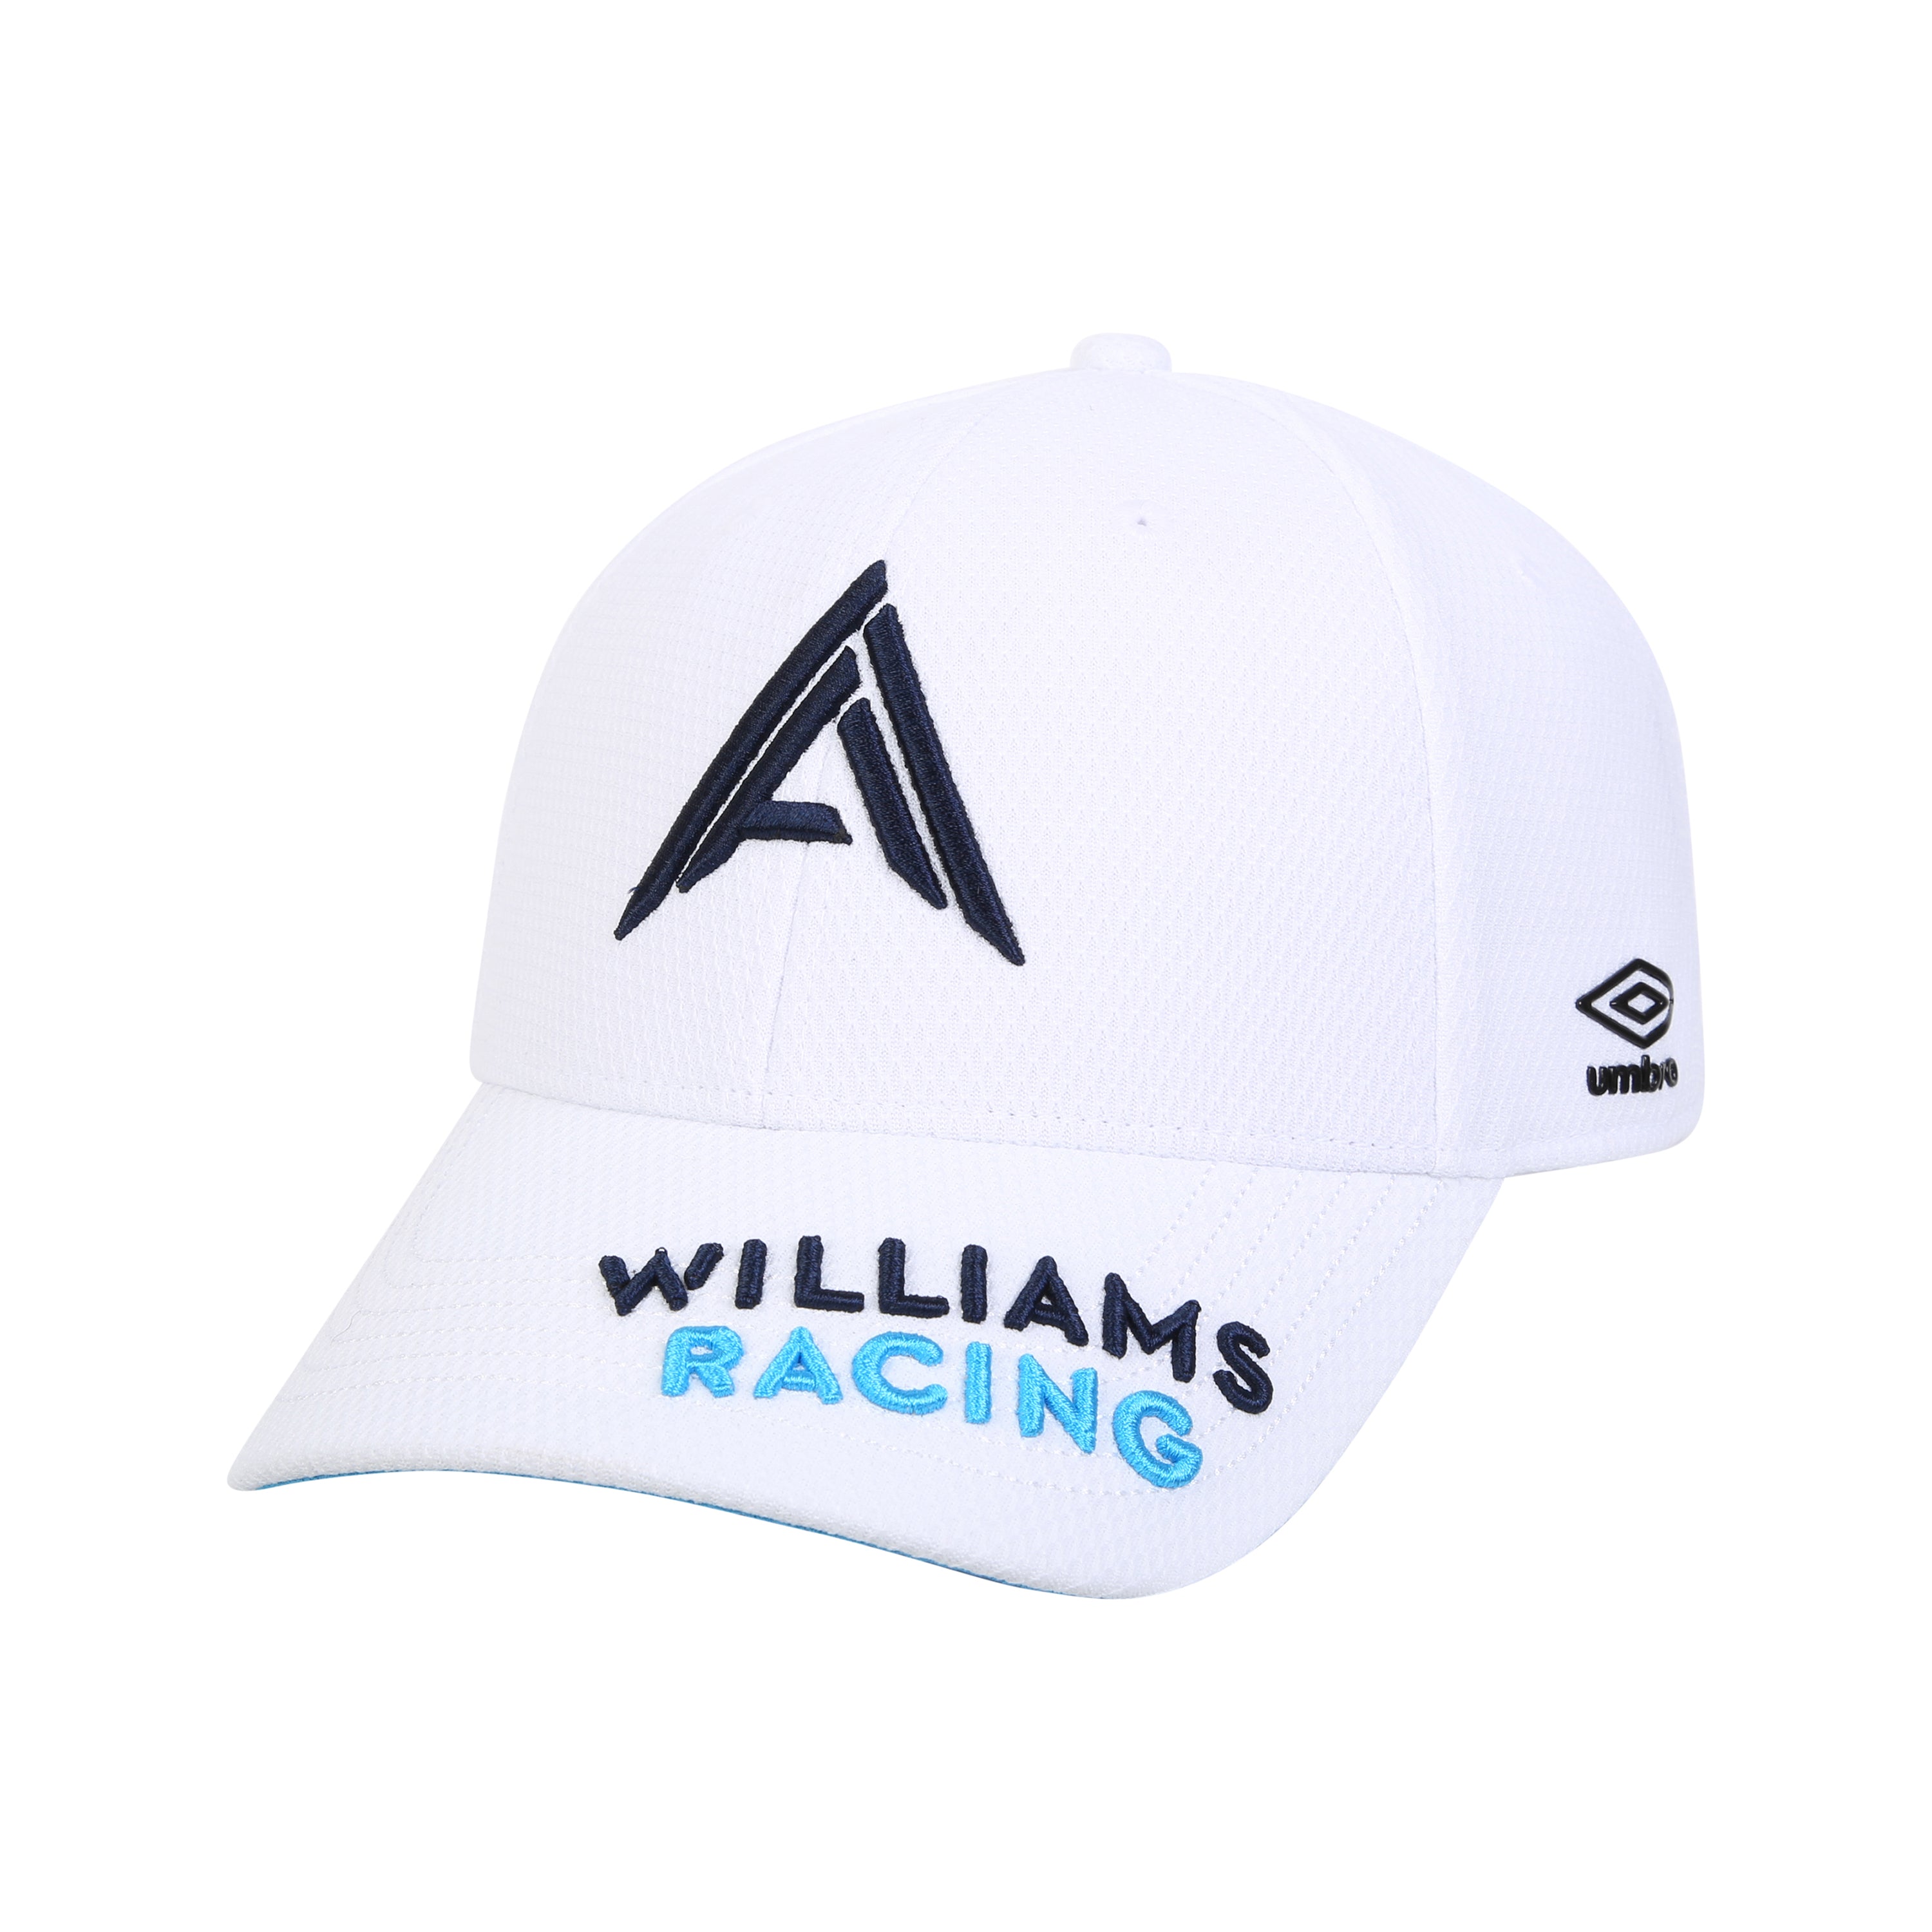 Williams Racing Team Alex Albon Driver Cap White